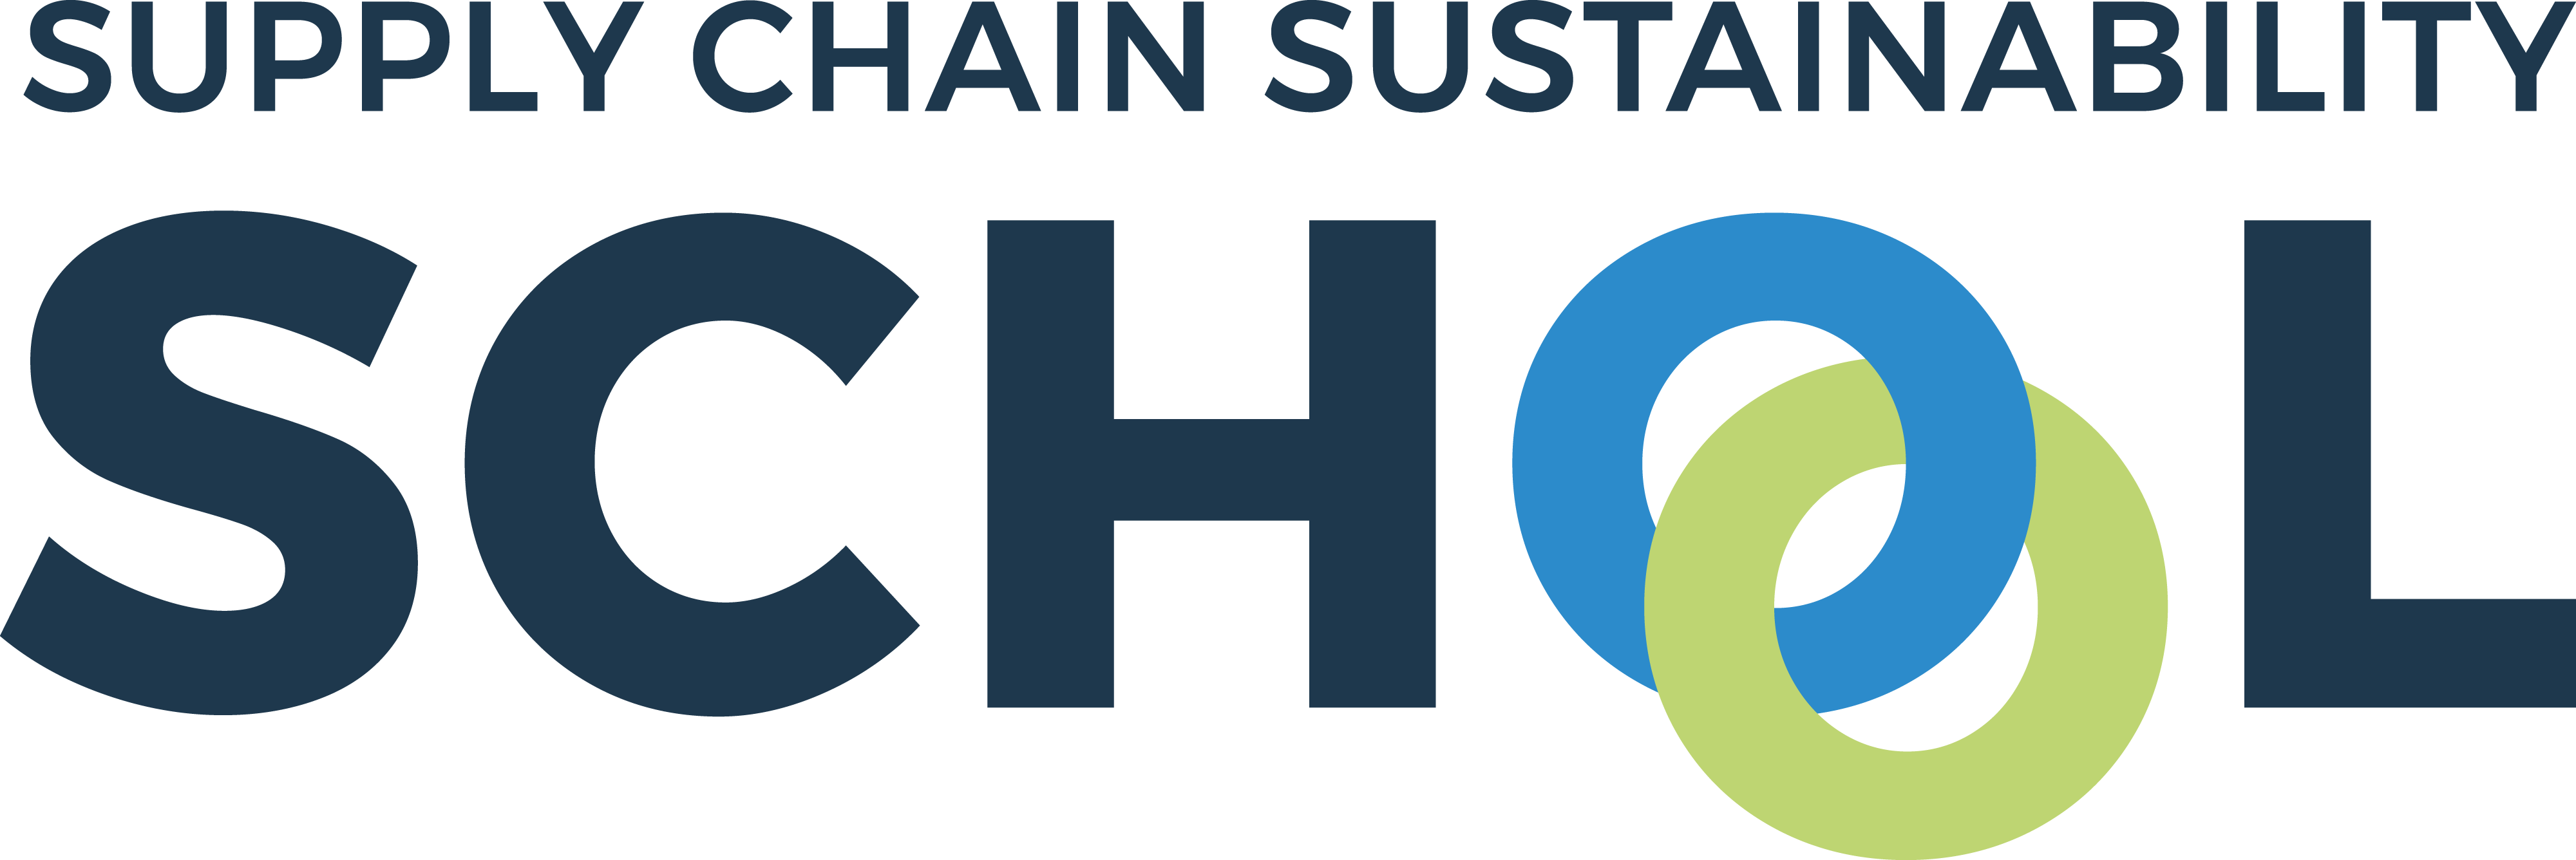 Supply Chain School logo